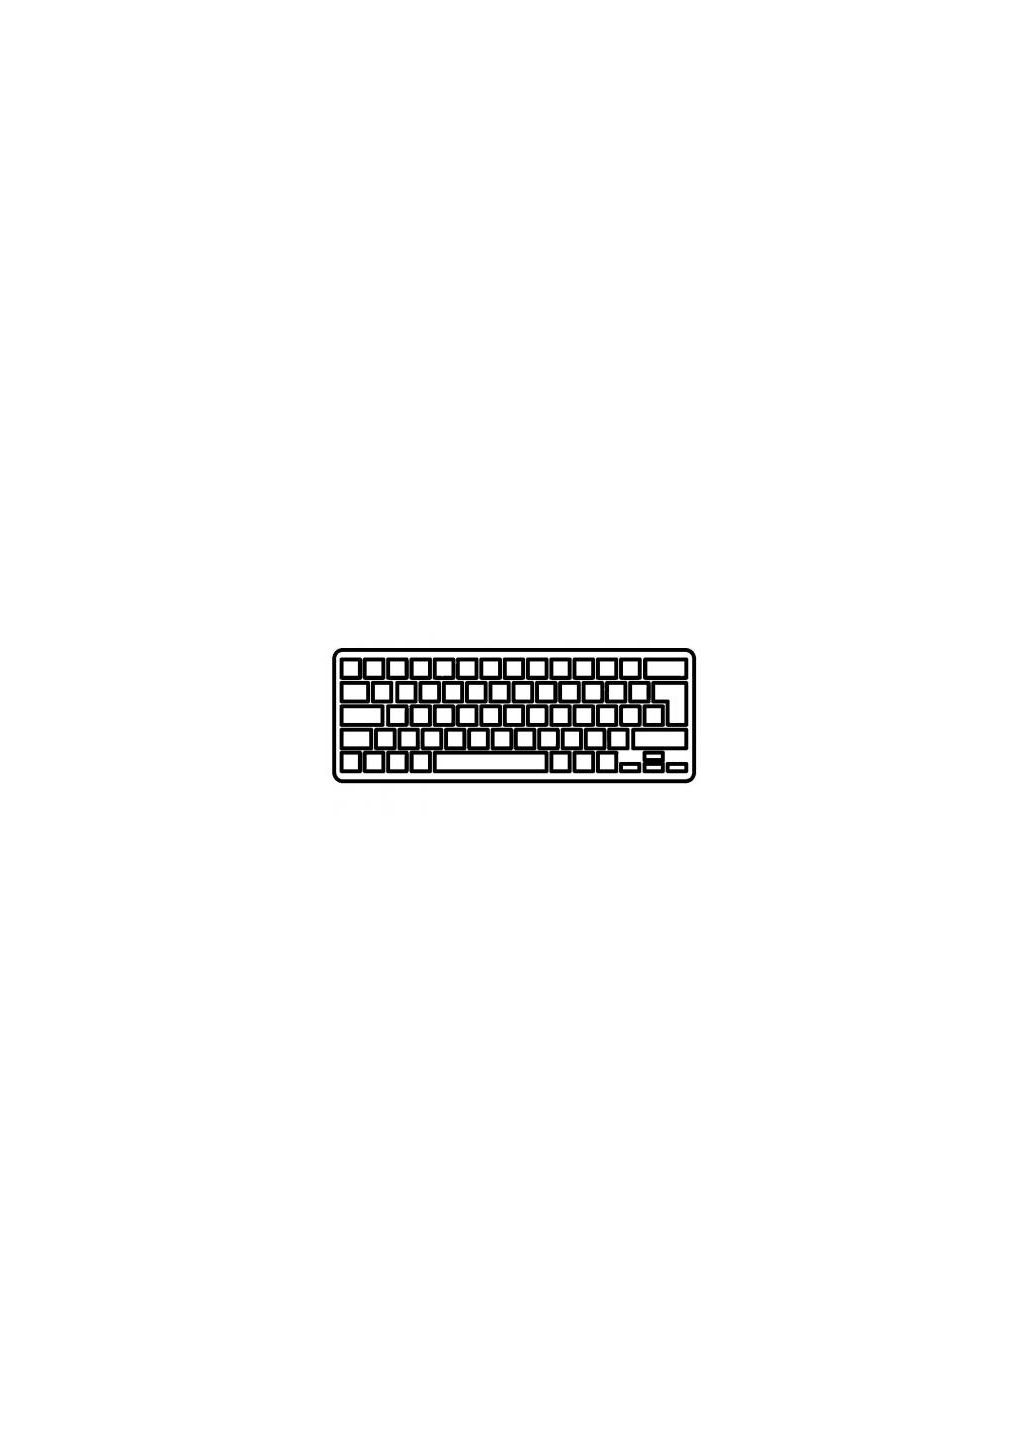 Клавиатура ноутбука (A43485) Asus c90/c90p/c90s/z97/z98 черная ru (276707881)